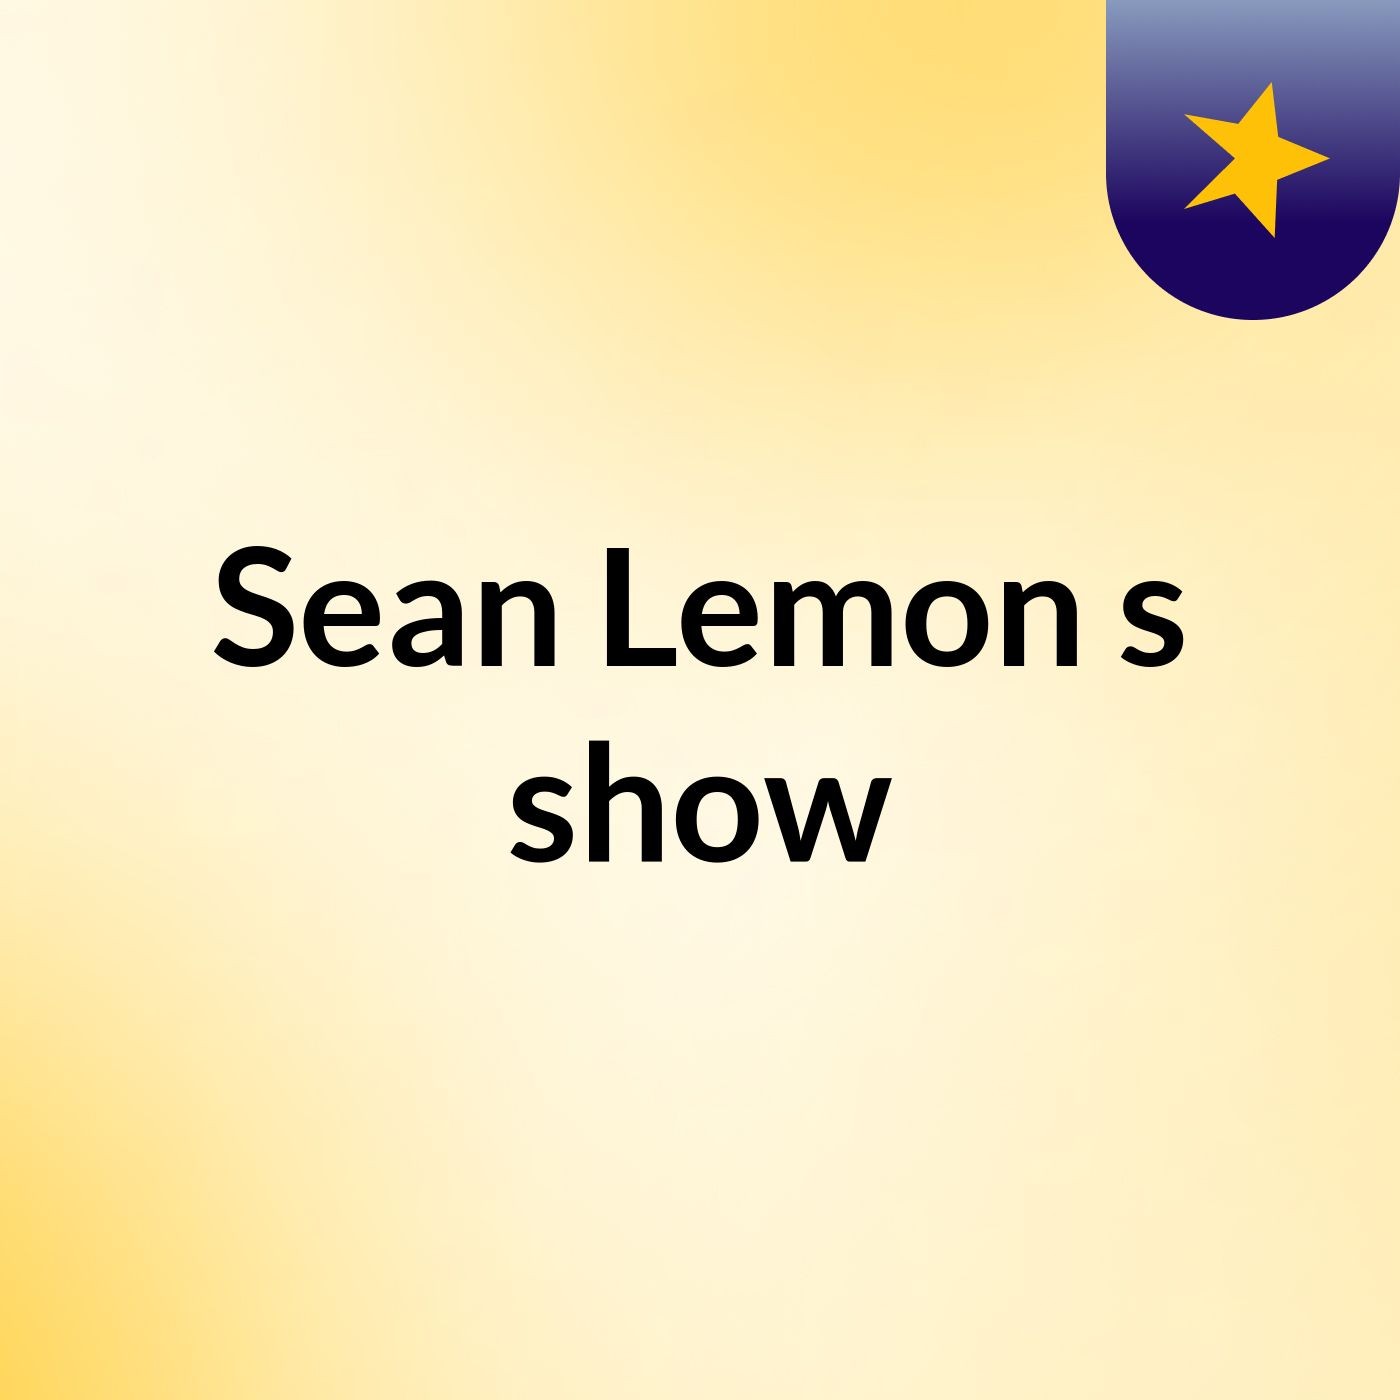 Sean Lemon's show